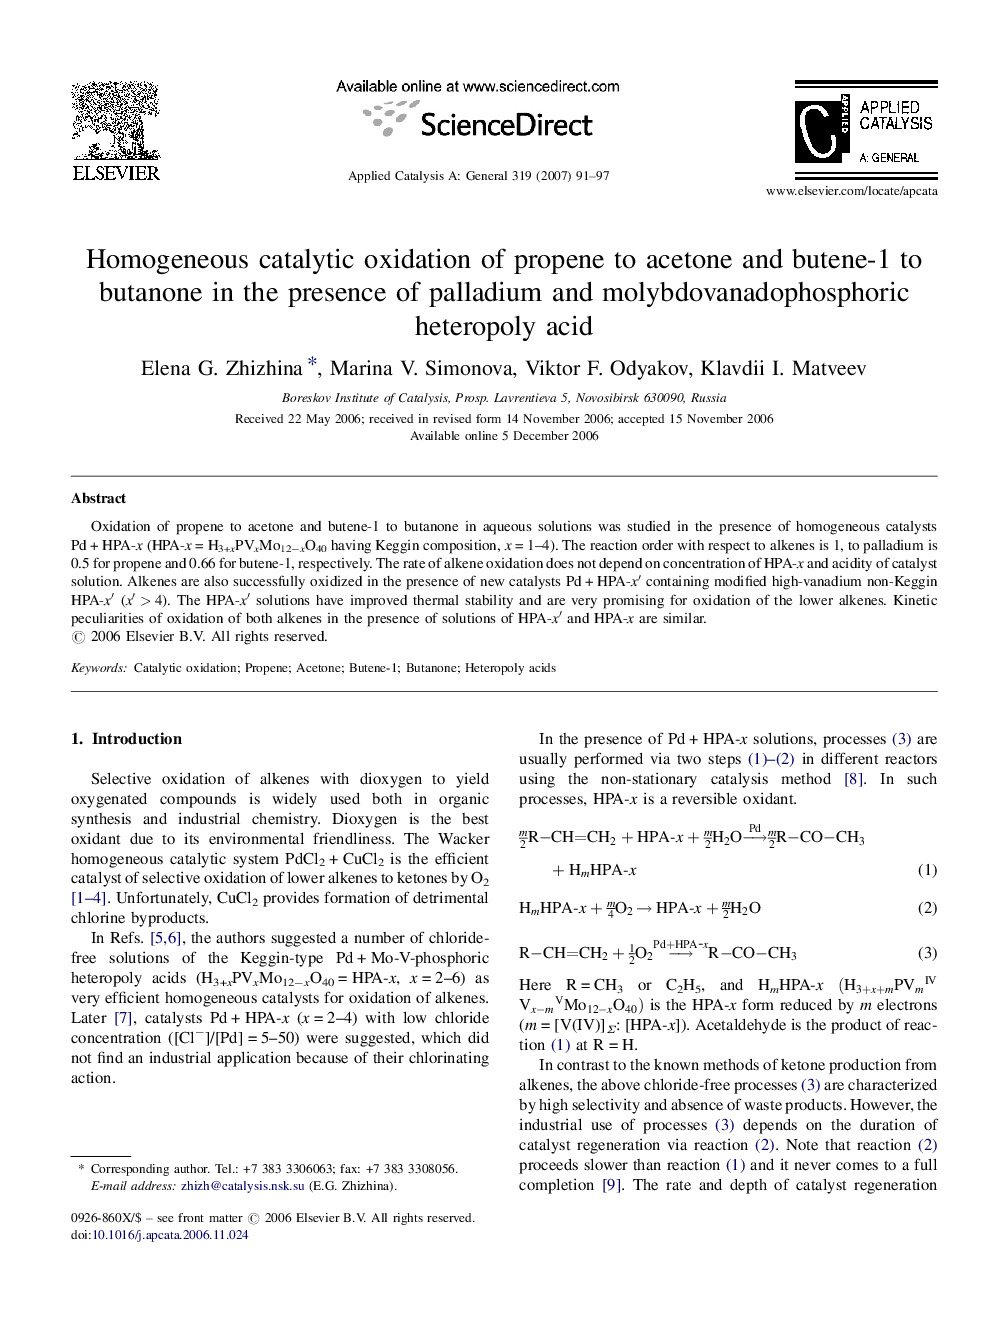 Homogeneous catalytic oxidation of propene to acetone and butene-1 to butanone in the presence of palladium and molybdovanadophosphoric heteropoly acid